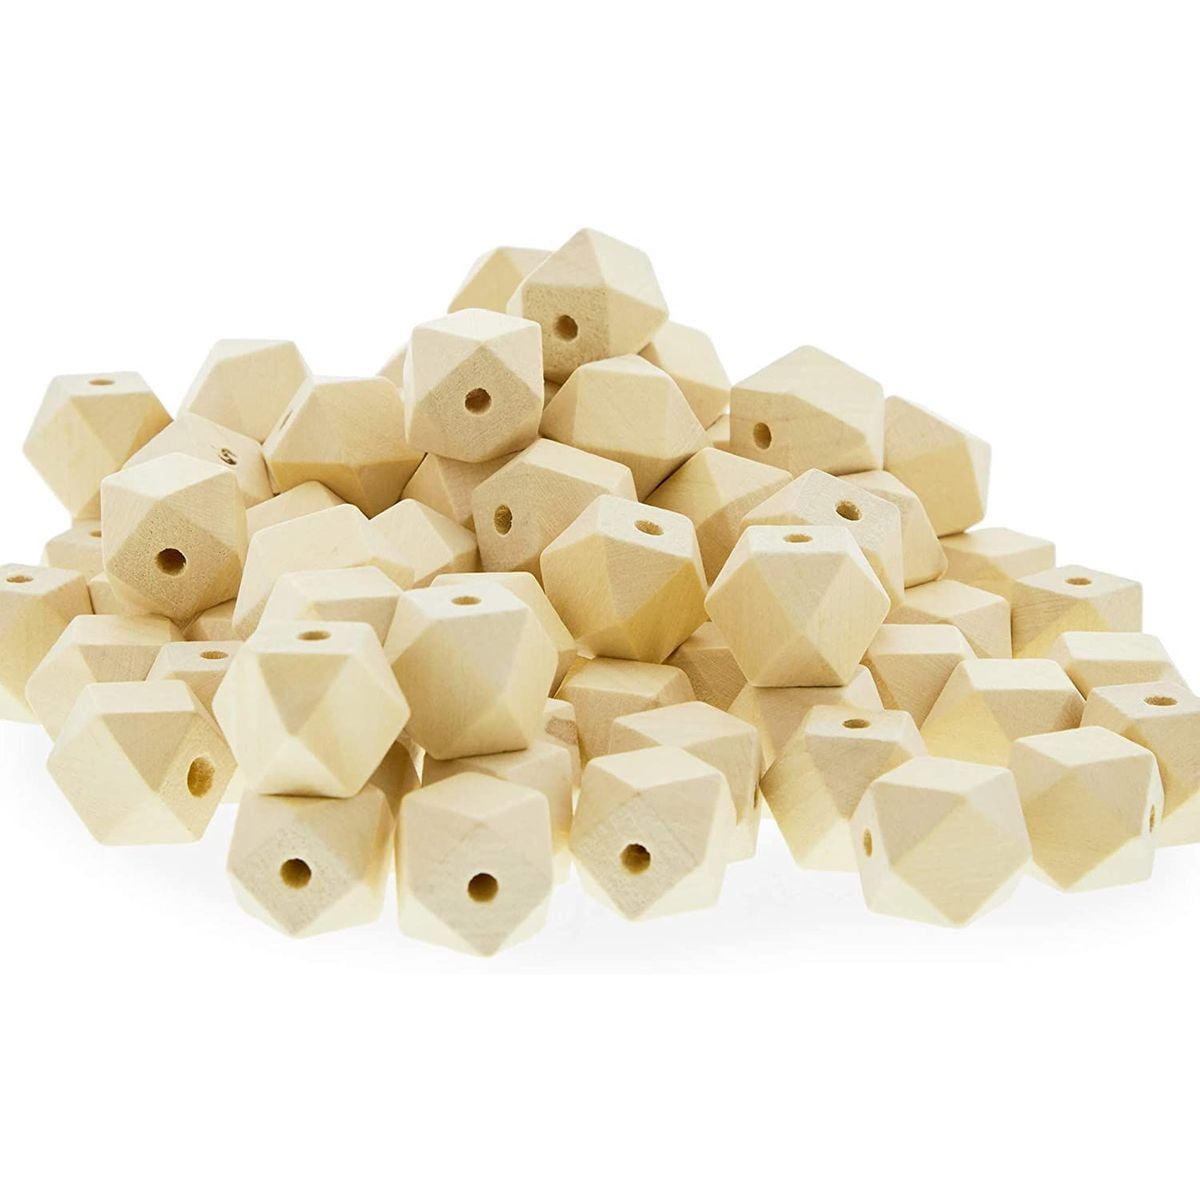 100 Pcs Bulk White Geometric Beads 20mm for Crafts and Jewelry Making - Walmart.com